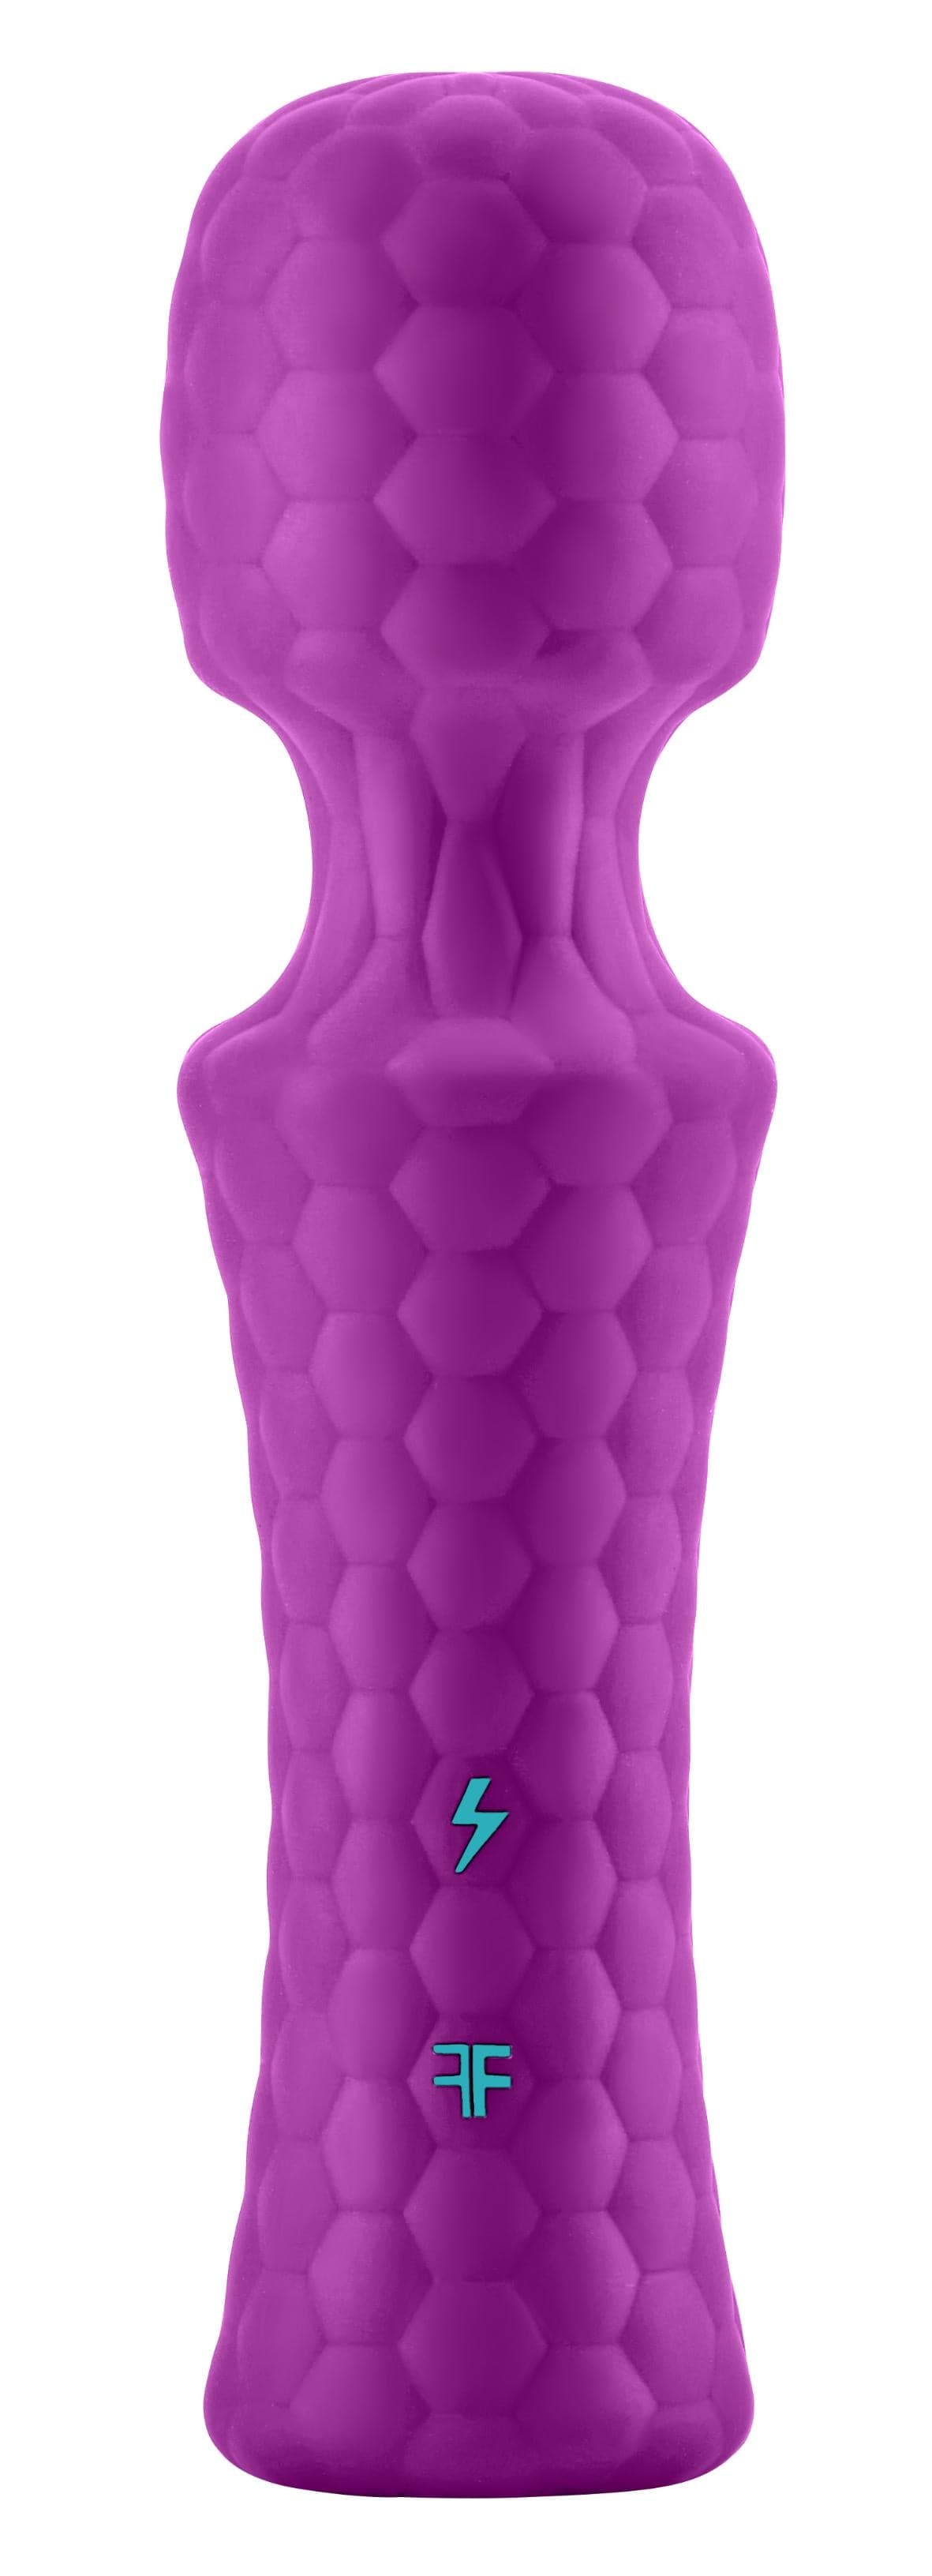 ultra wand mini purple